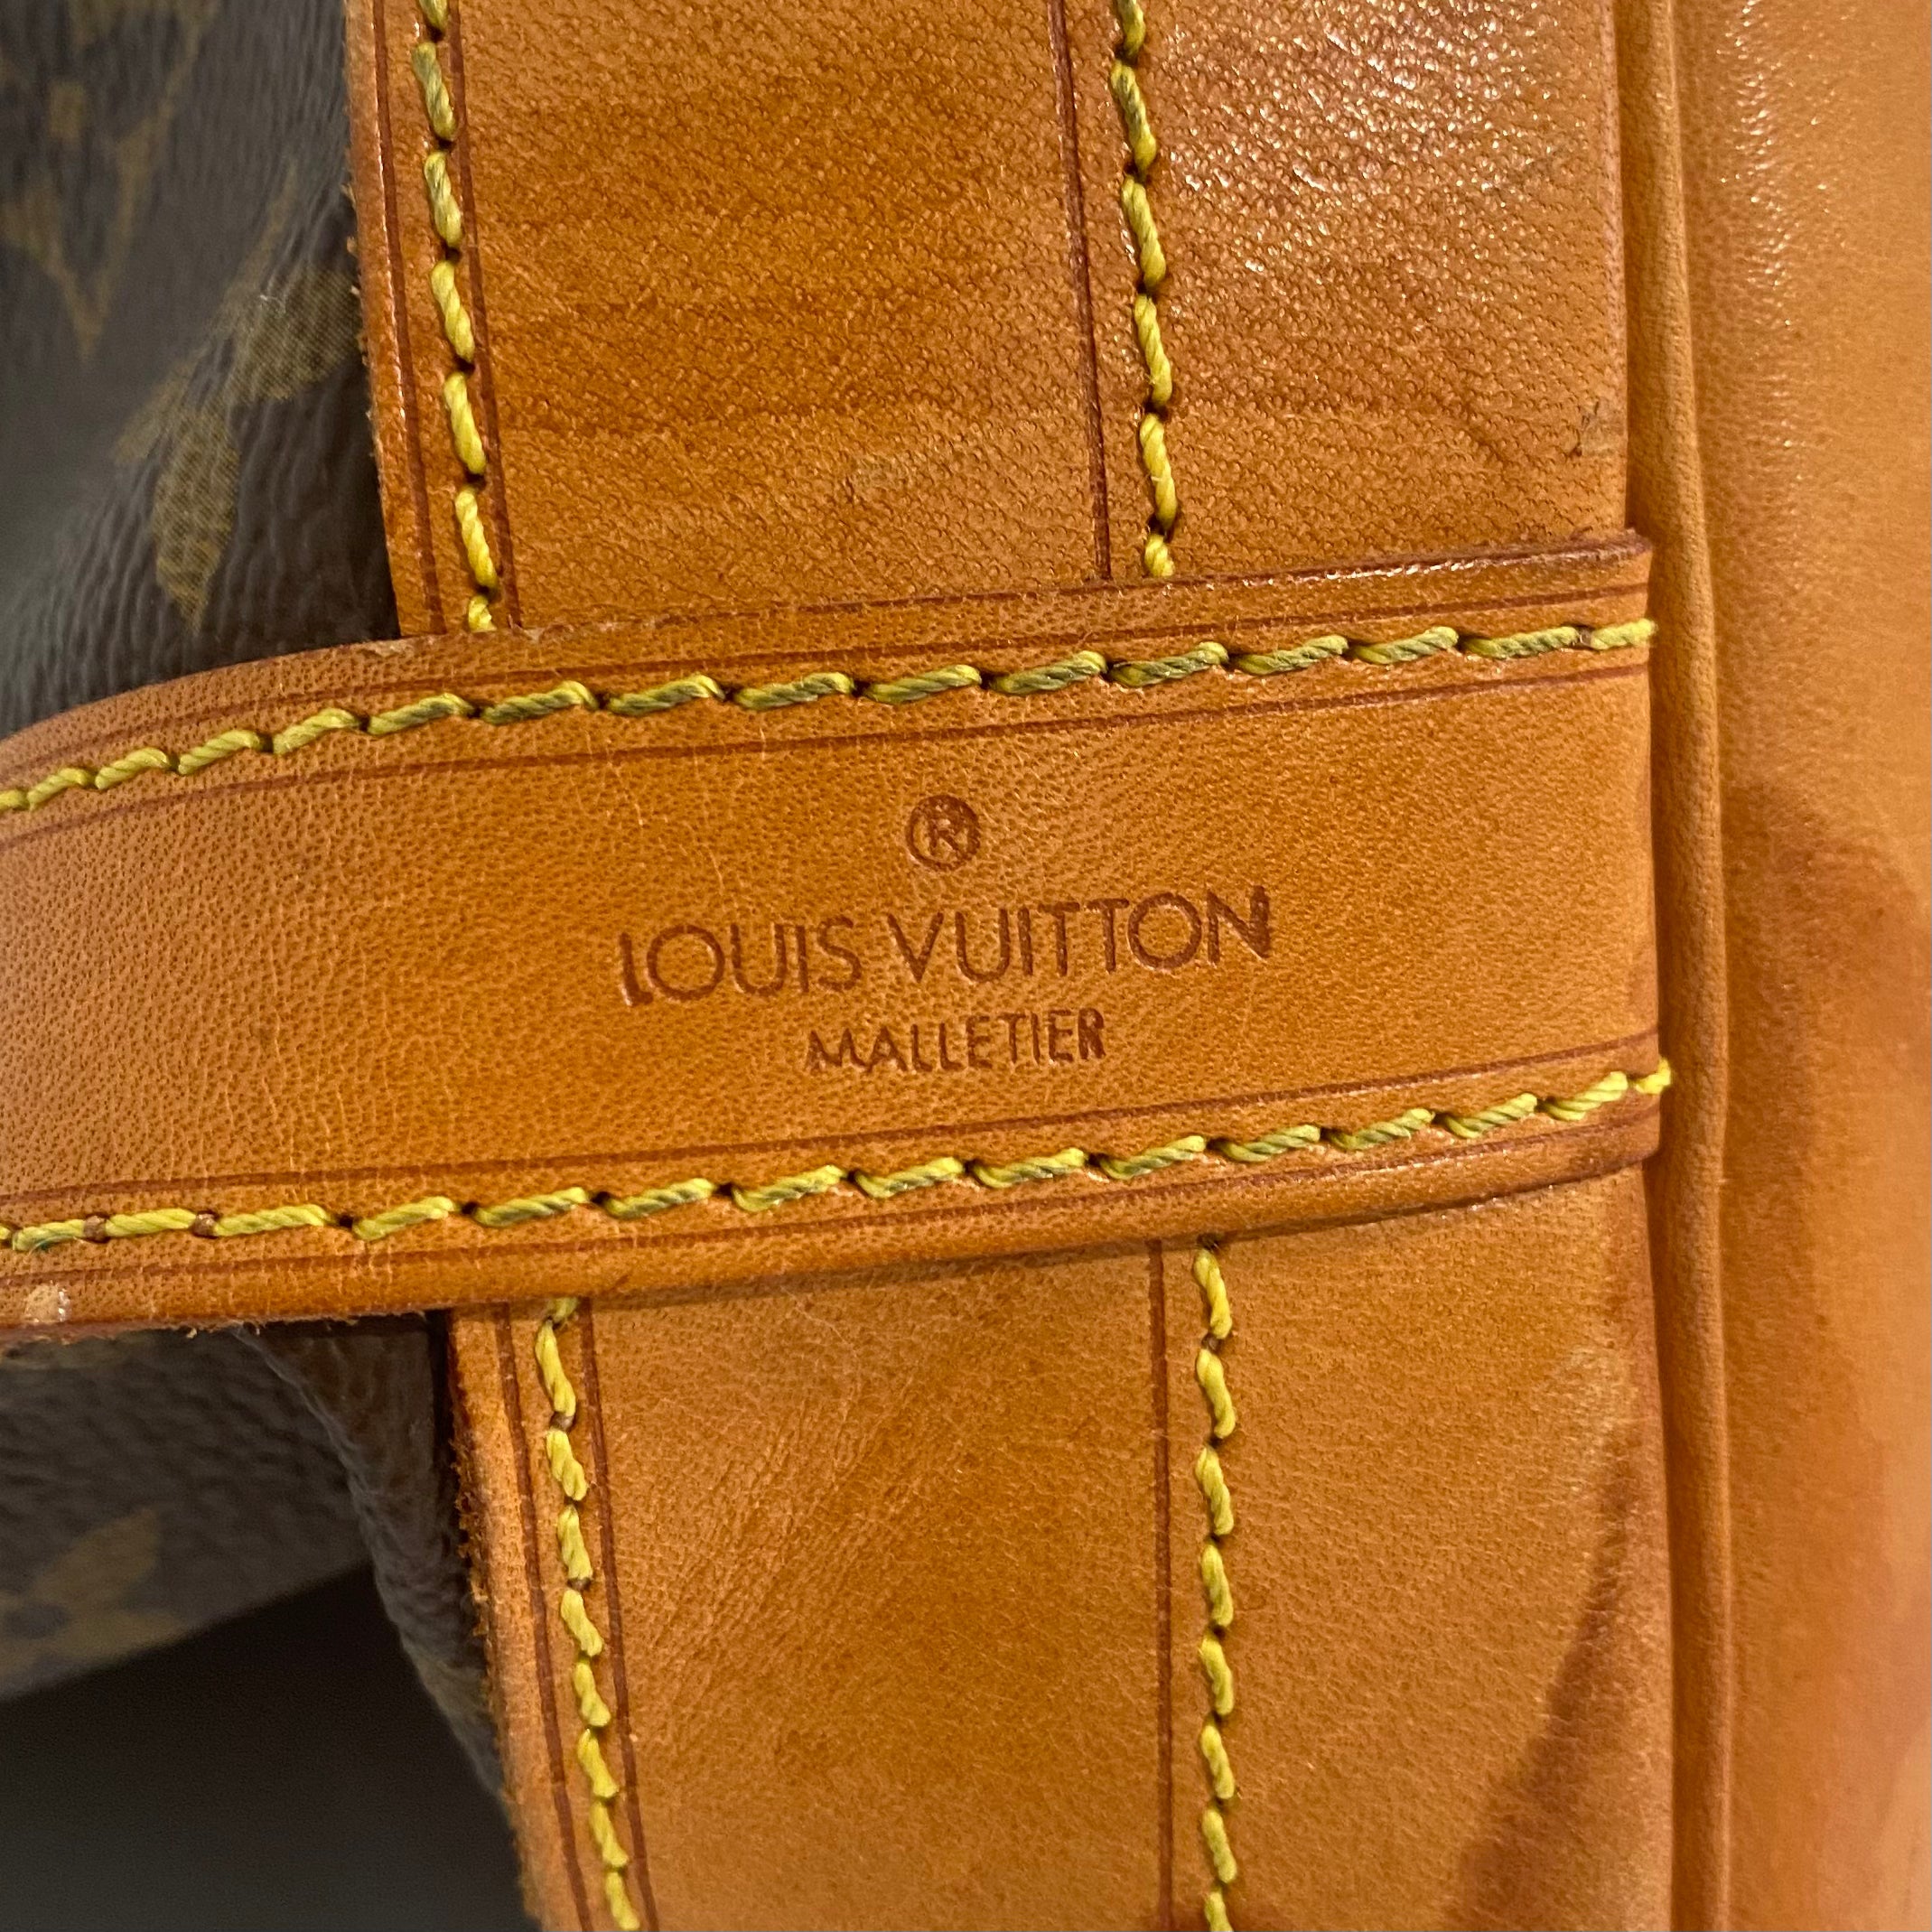 Nasty Gal Launches Vintage Louis Vuitton Sale